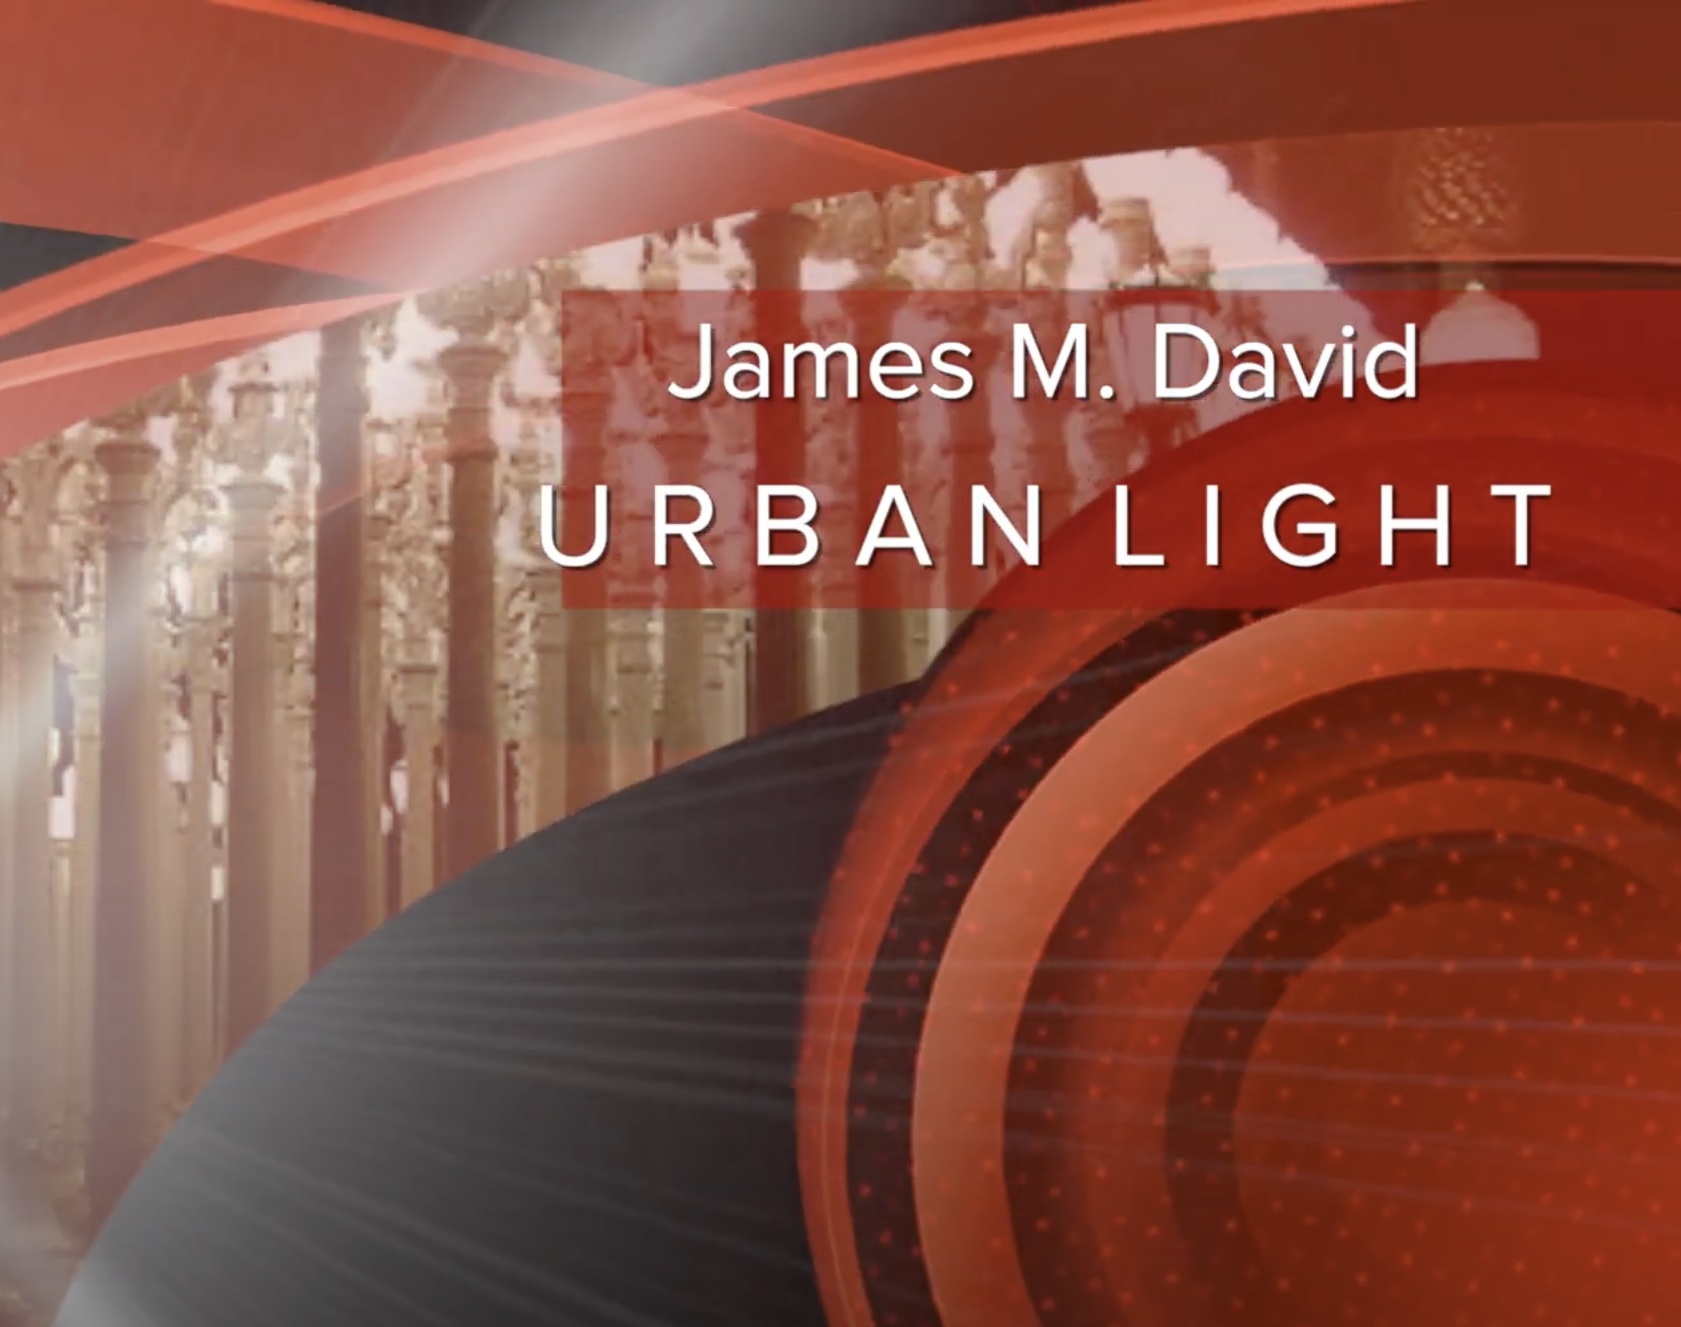 Urban Light Video Cover Image 